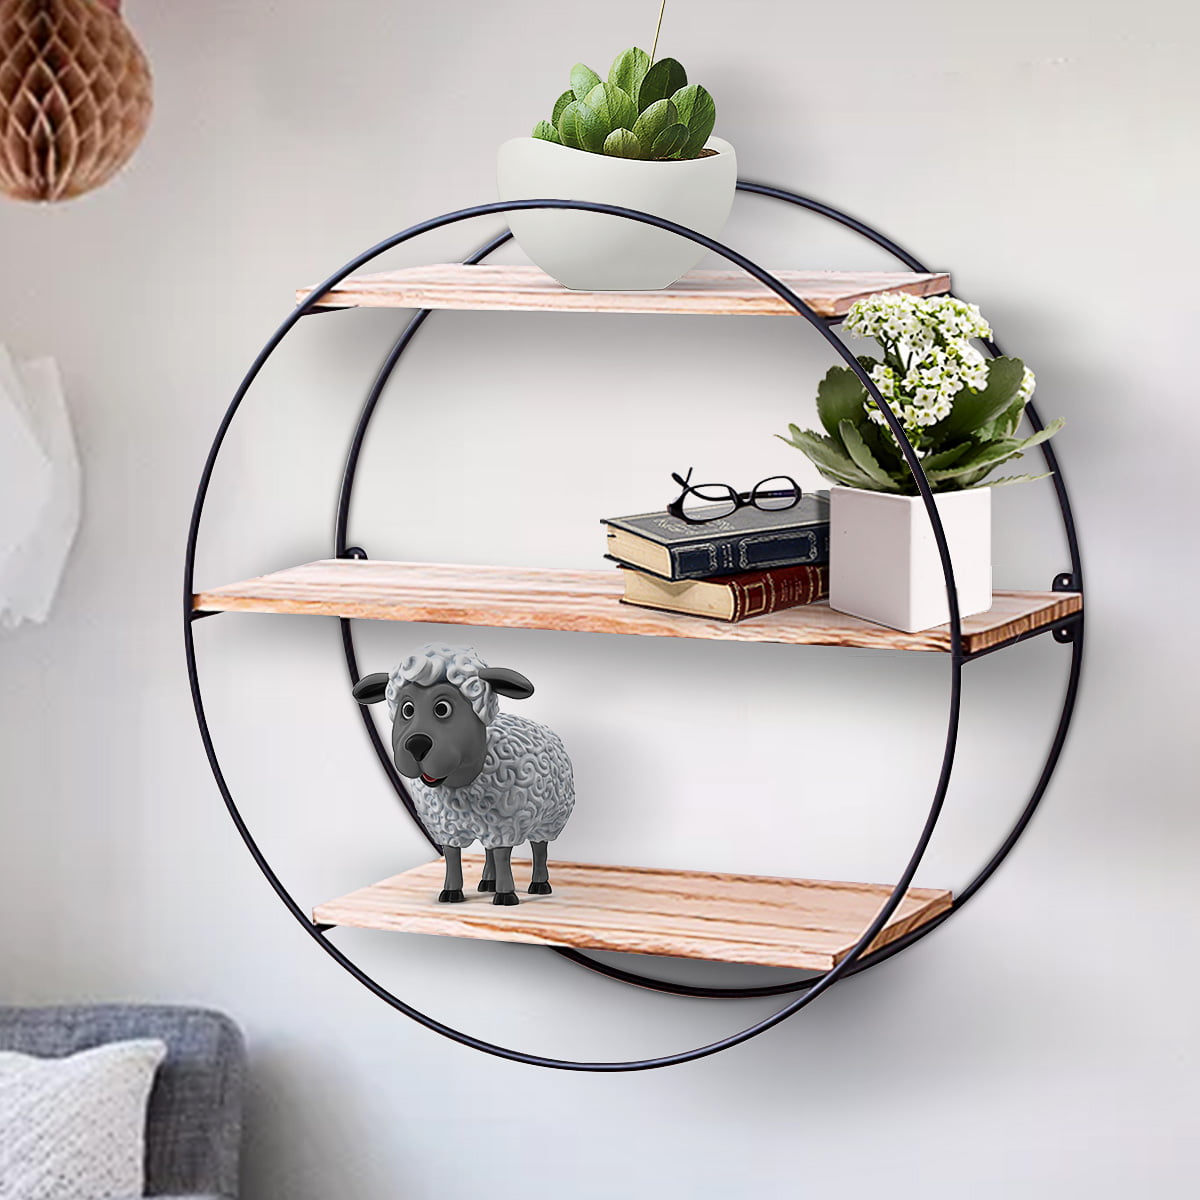 Modern Round Hanging Shelf with Simple Decor